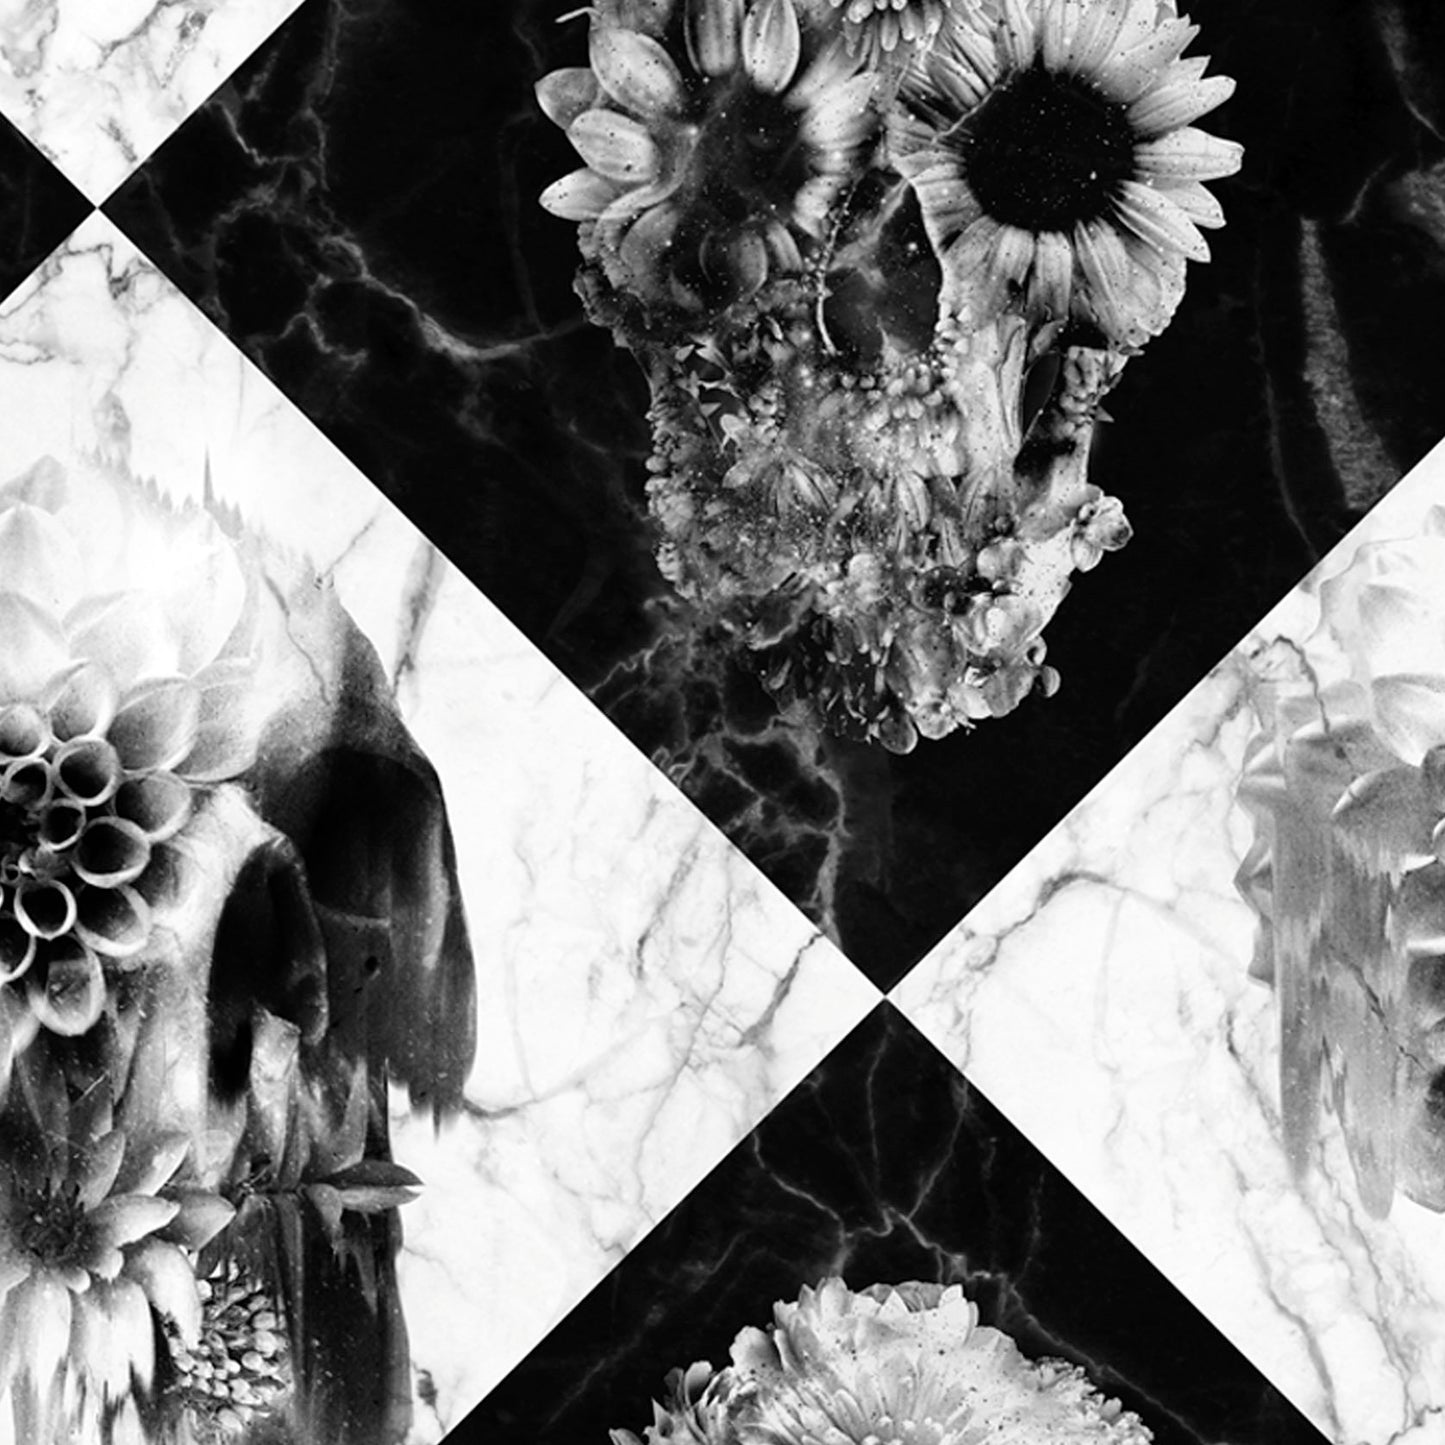 Skull Wallpaper Home Decor, Checkered Skull Art Print Traditional Wallpaper Gift, Marble Pattern Black And White Floral Wallpaper